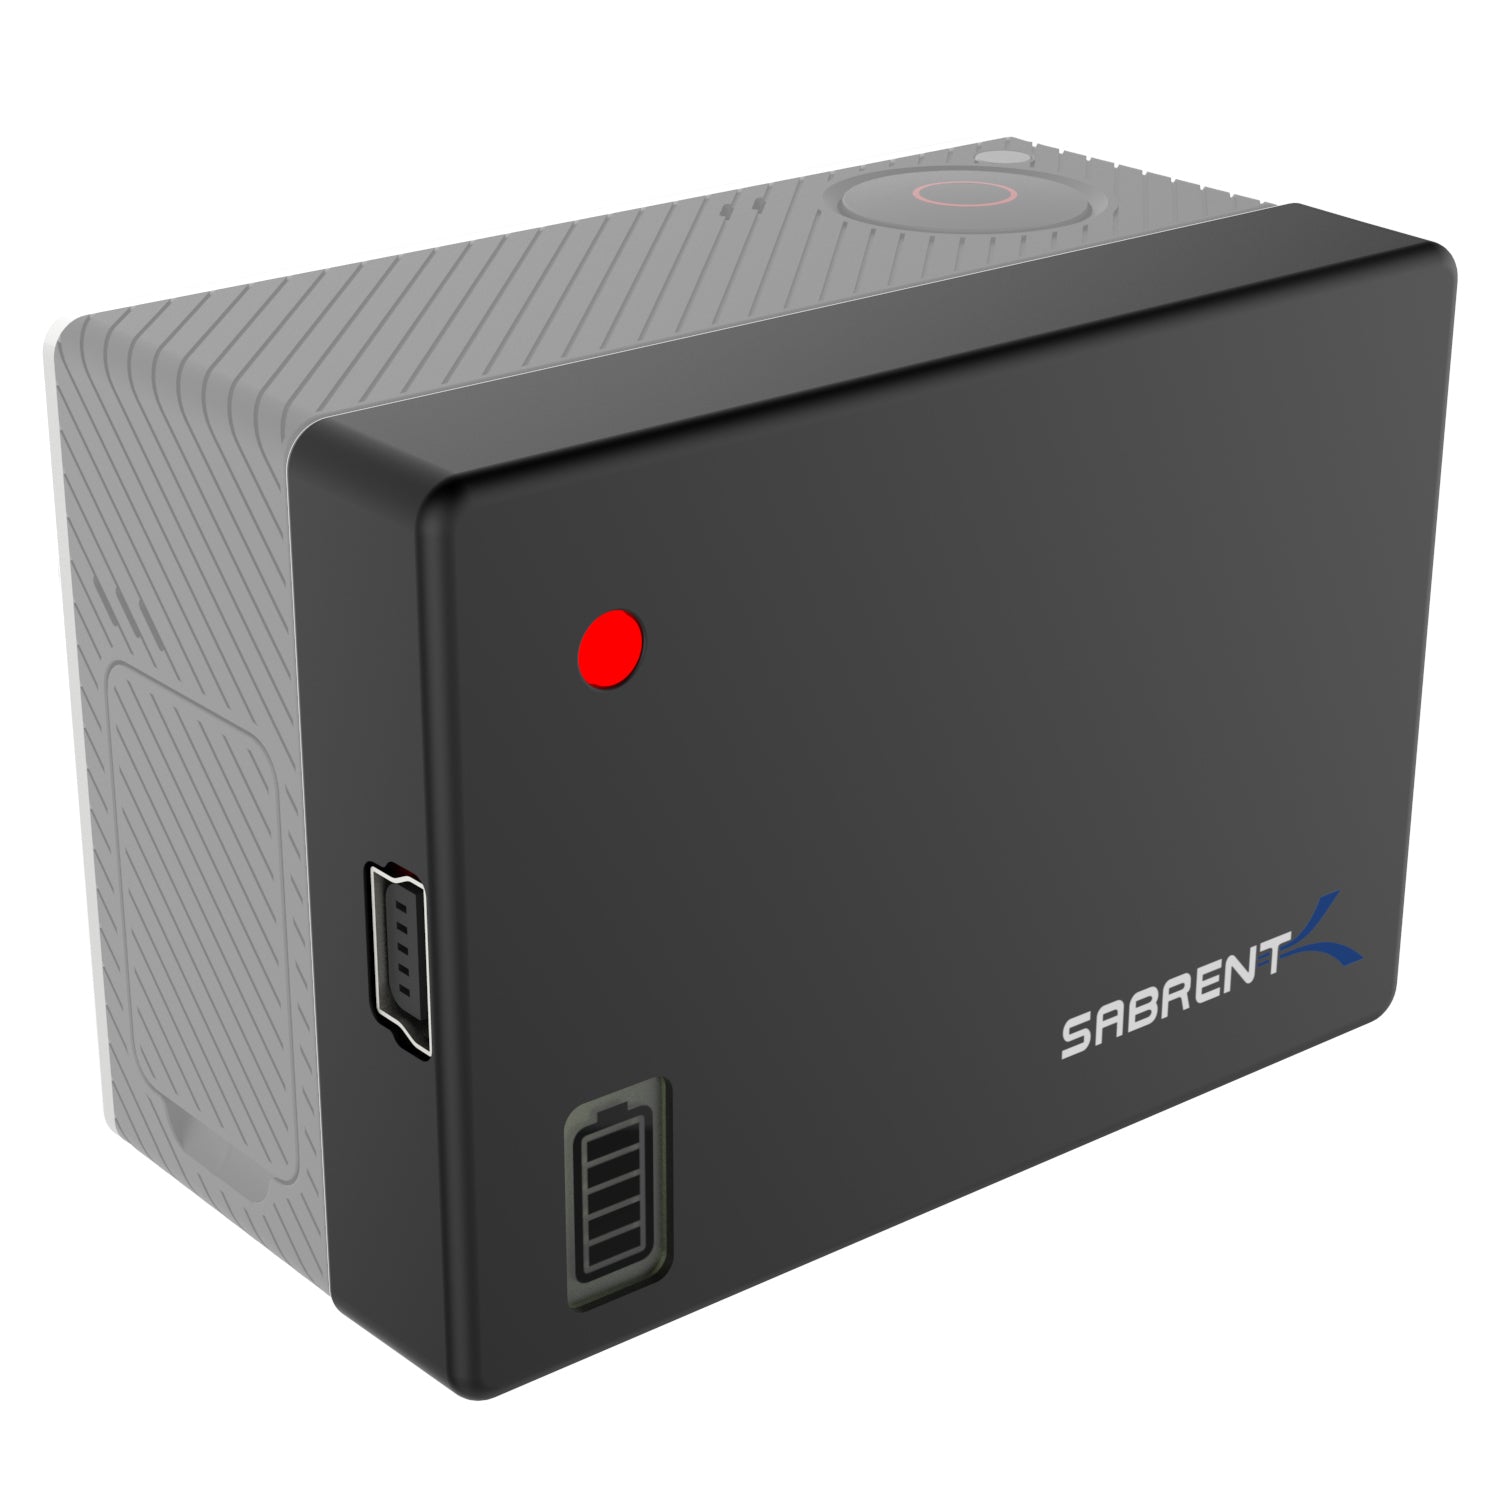 GoPro External Battery BacPac ABPAK-401 fits Hero 3, 3+, 4, FLASH SALE! 15%  More